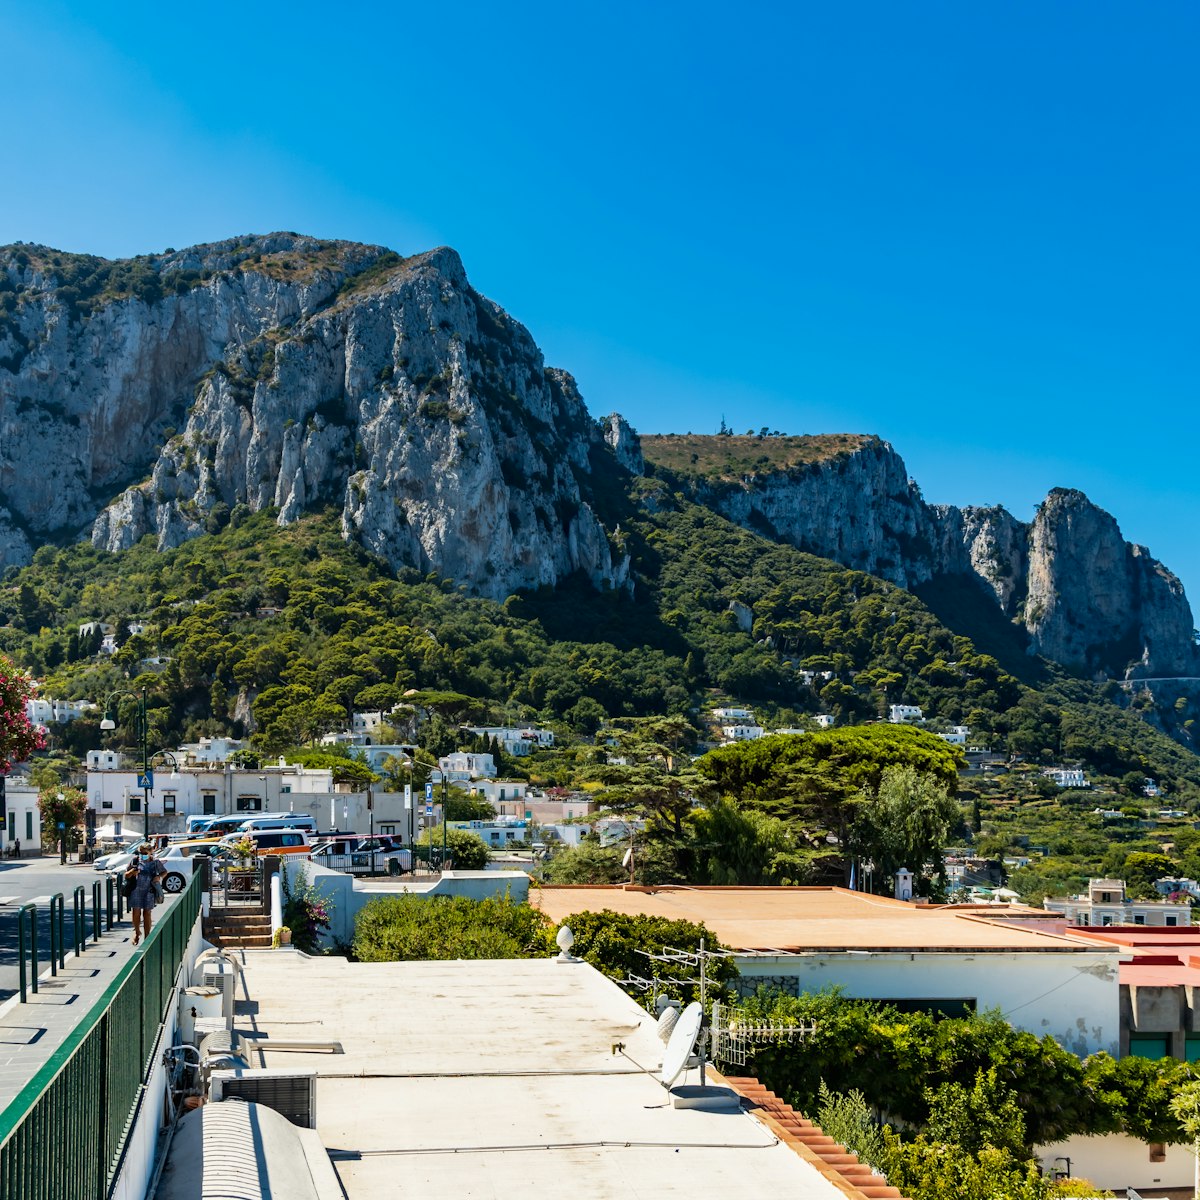 Capri, Italy - August 24 2020: Cityscape of Capri island with green hills and Monte Solaro mountain
1333545060